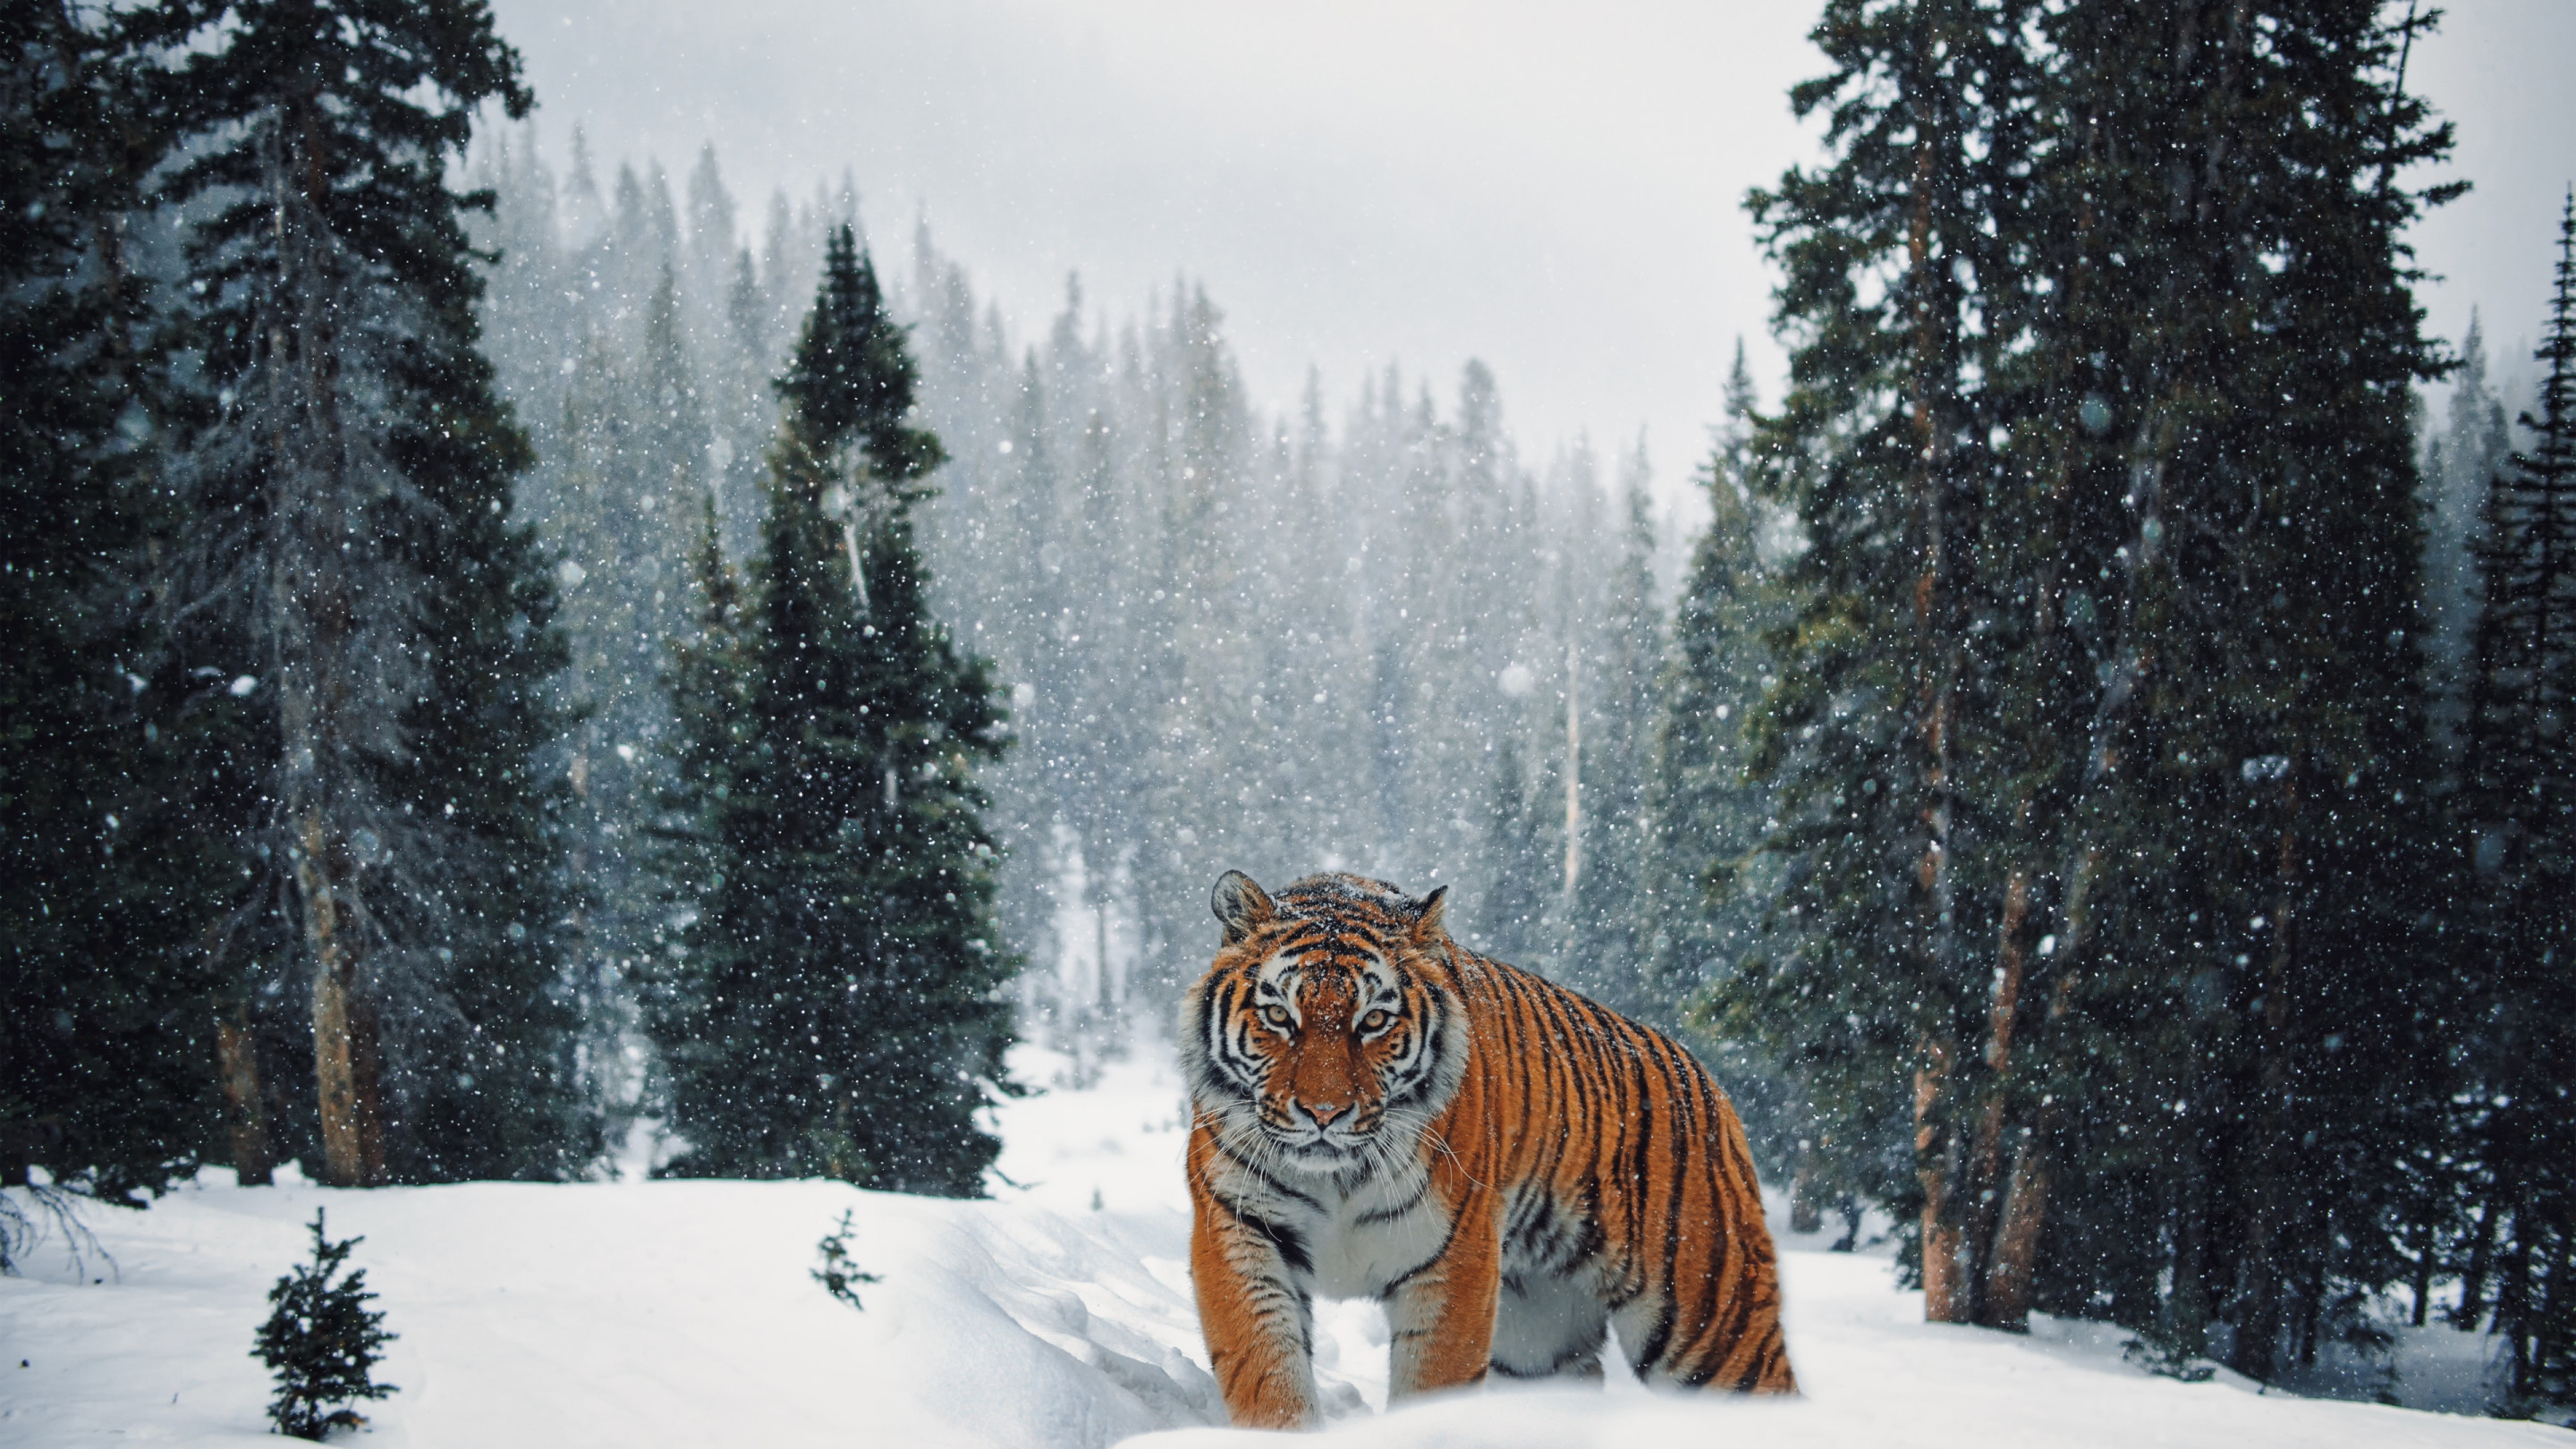 Siberian Tiger in Winter landscape wallpaper 2880x1620